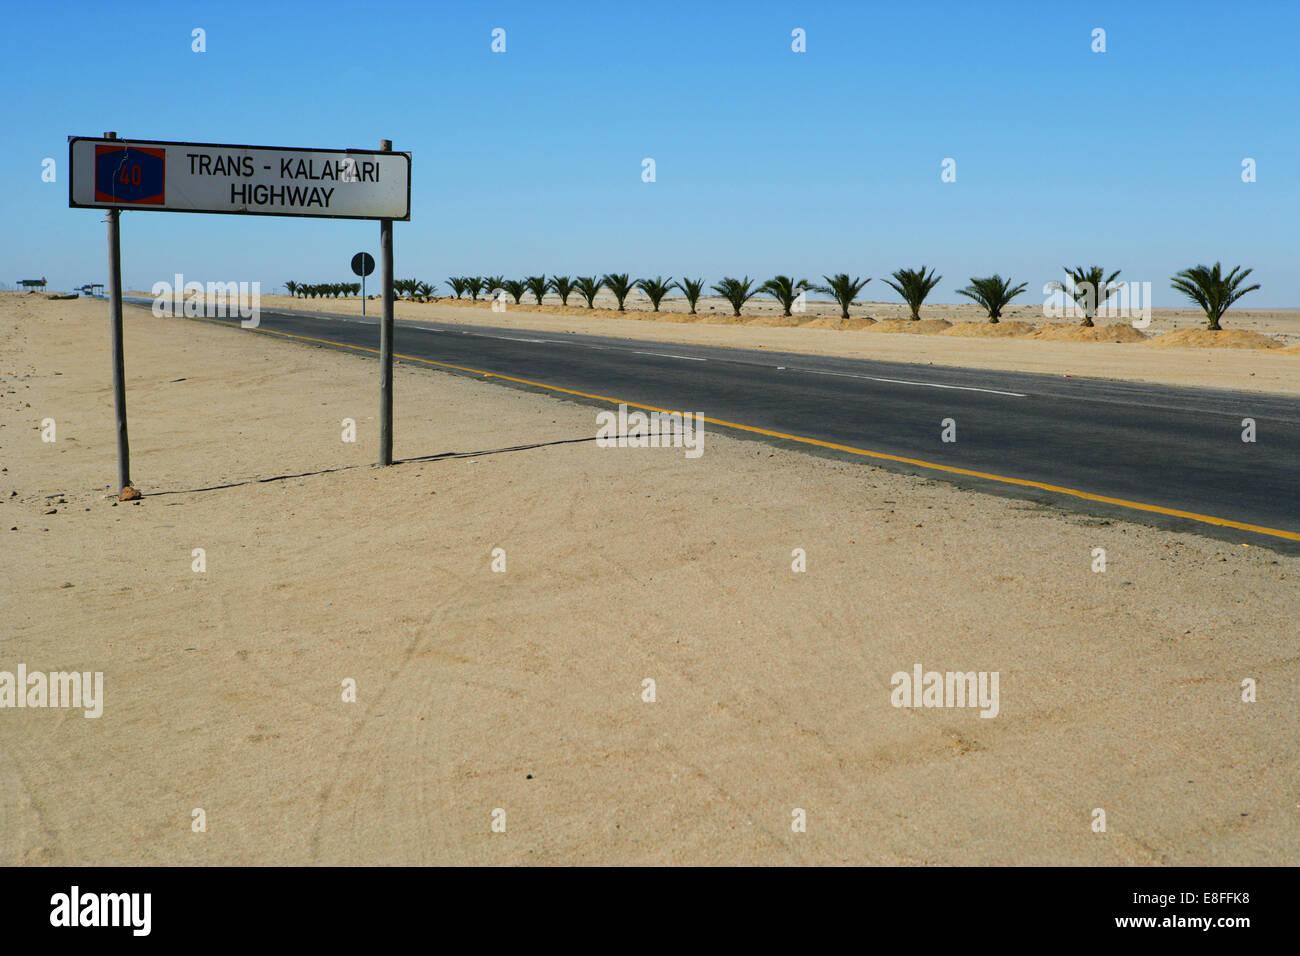 Roadside Trans-Kalahari highway road sign, Kalahari Desert, Namibia Stock Photo